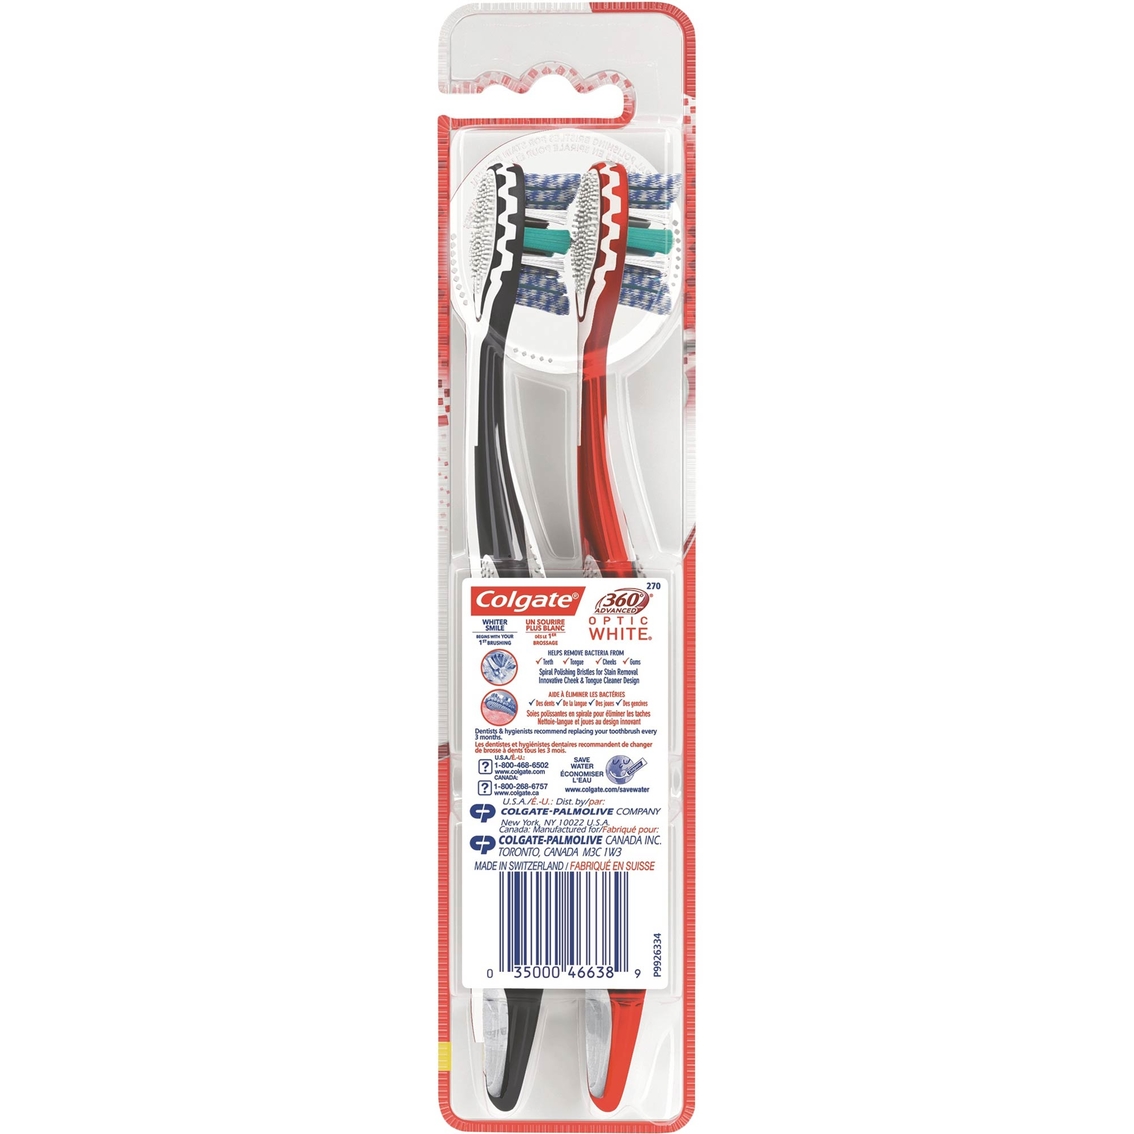 Colgate 360 Advanced Optic White Toothbrush 2 pk. - Image 2 of 3